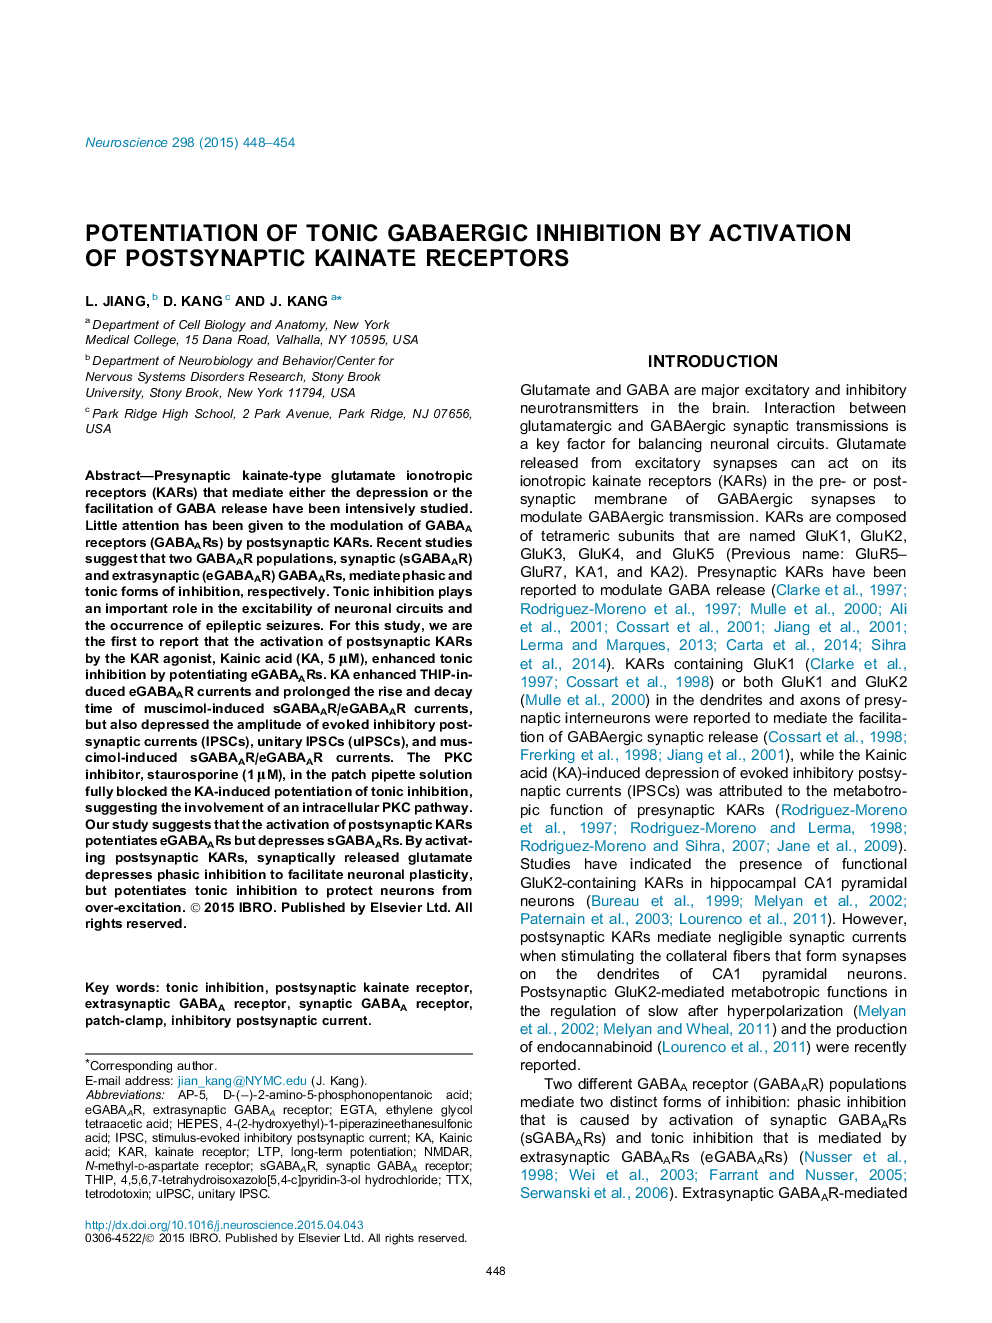 Potentiation of tonic GABAergic inhibition by activation of postsynaptic kainate receptors